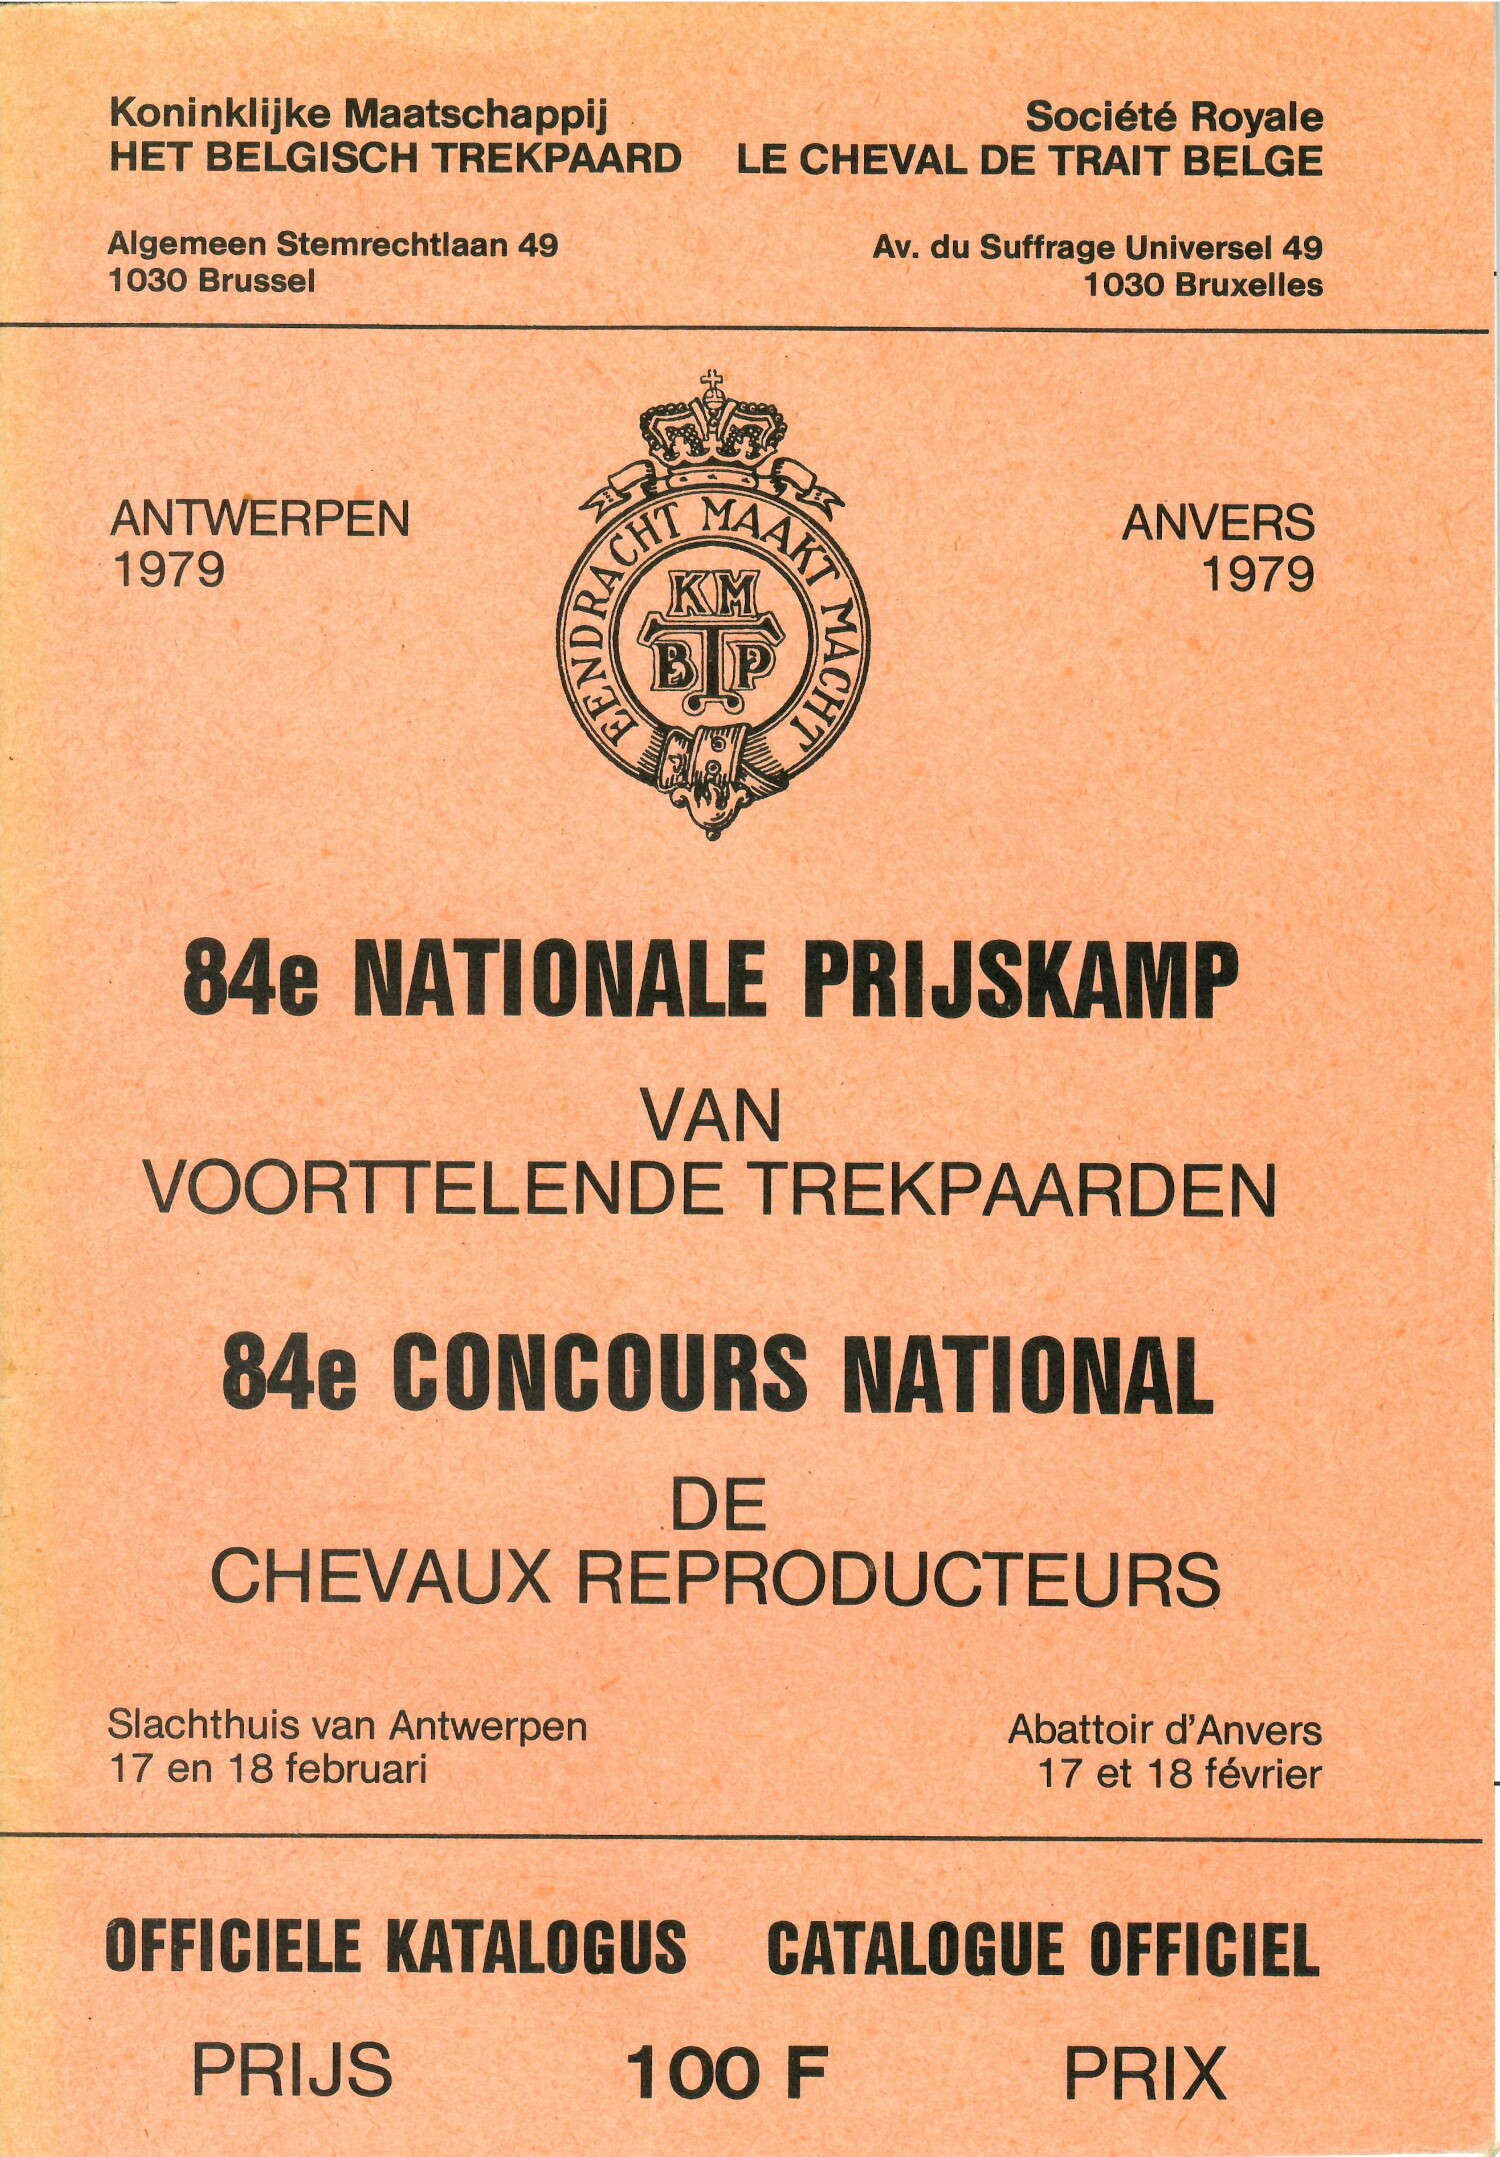 Les Cheval de trait belge et adennes 1979 (Herausgeber RR-R)